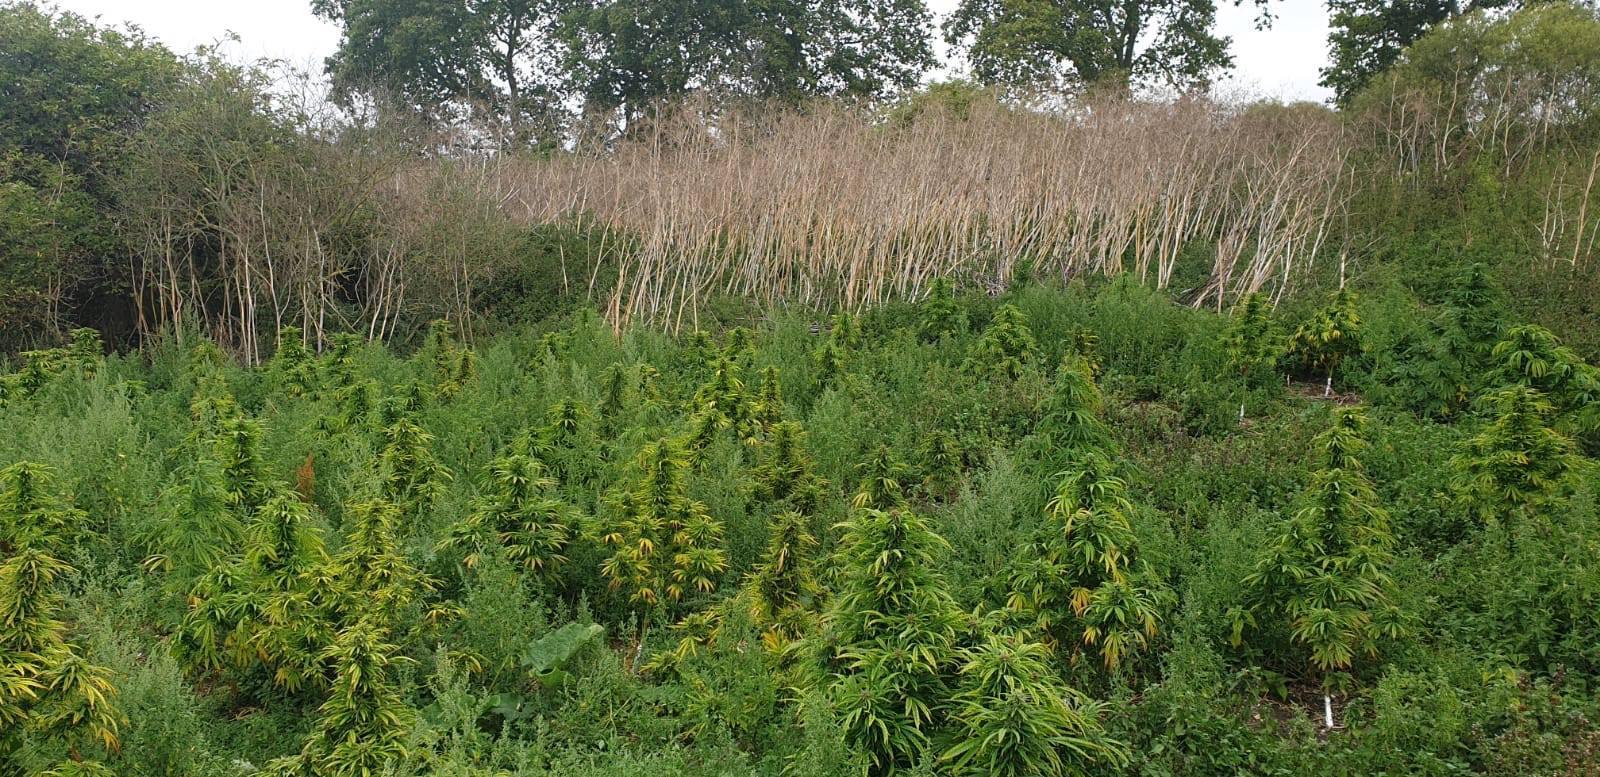 Massive cannabis field found in Kingston